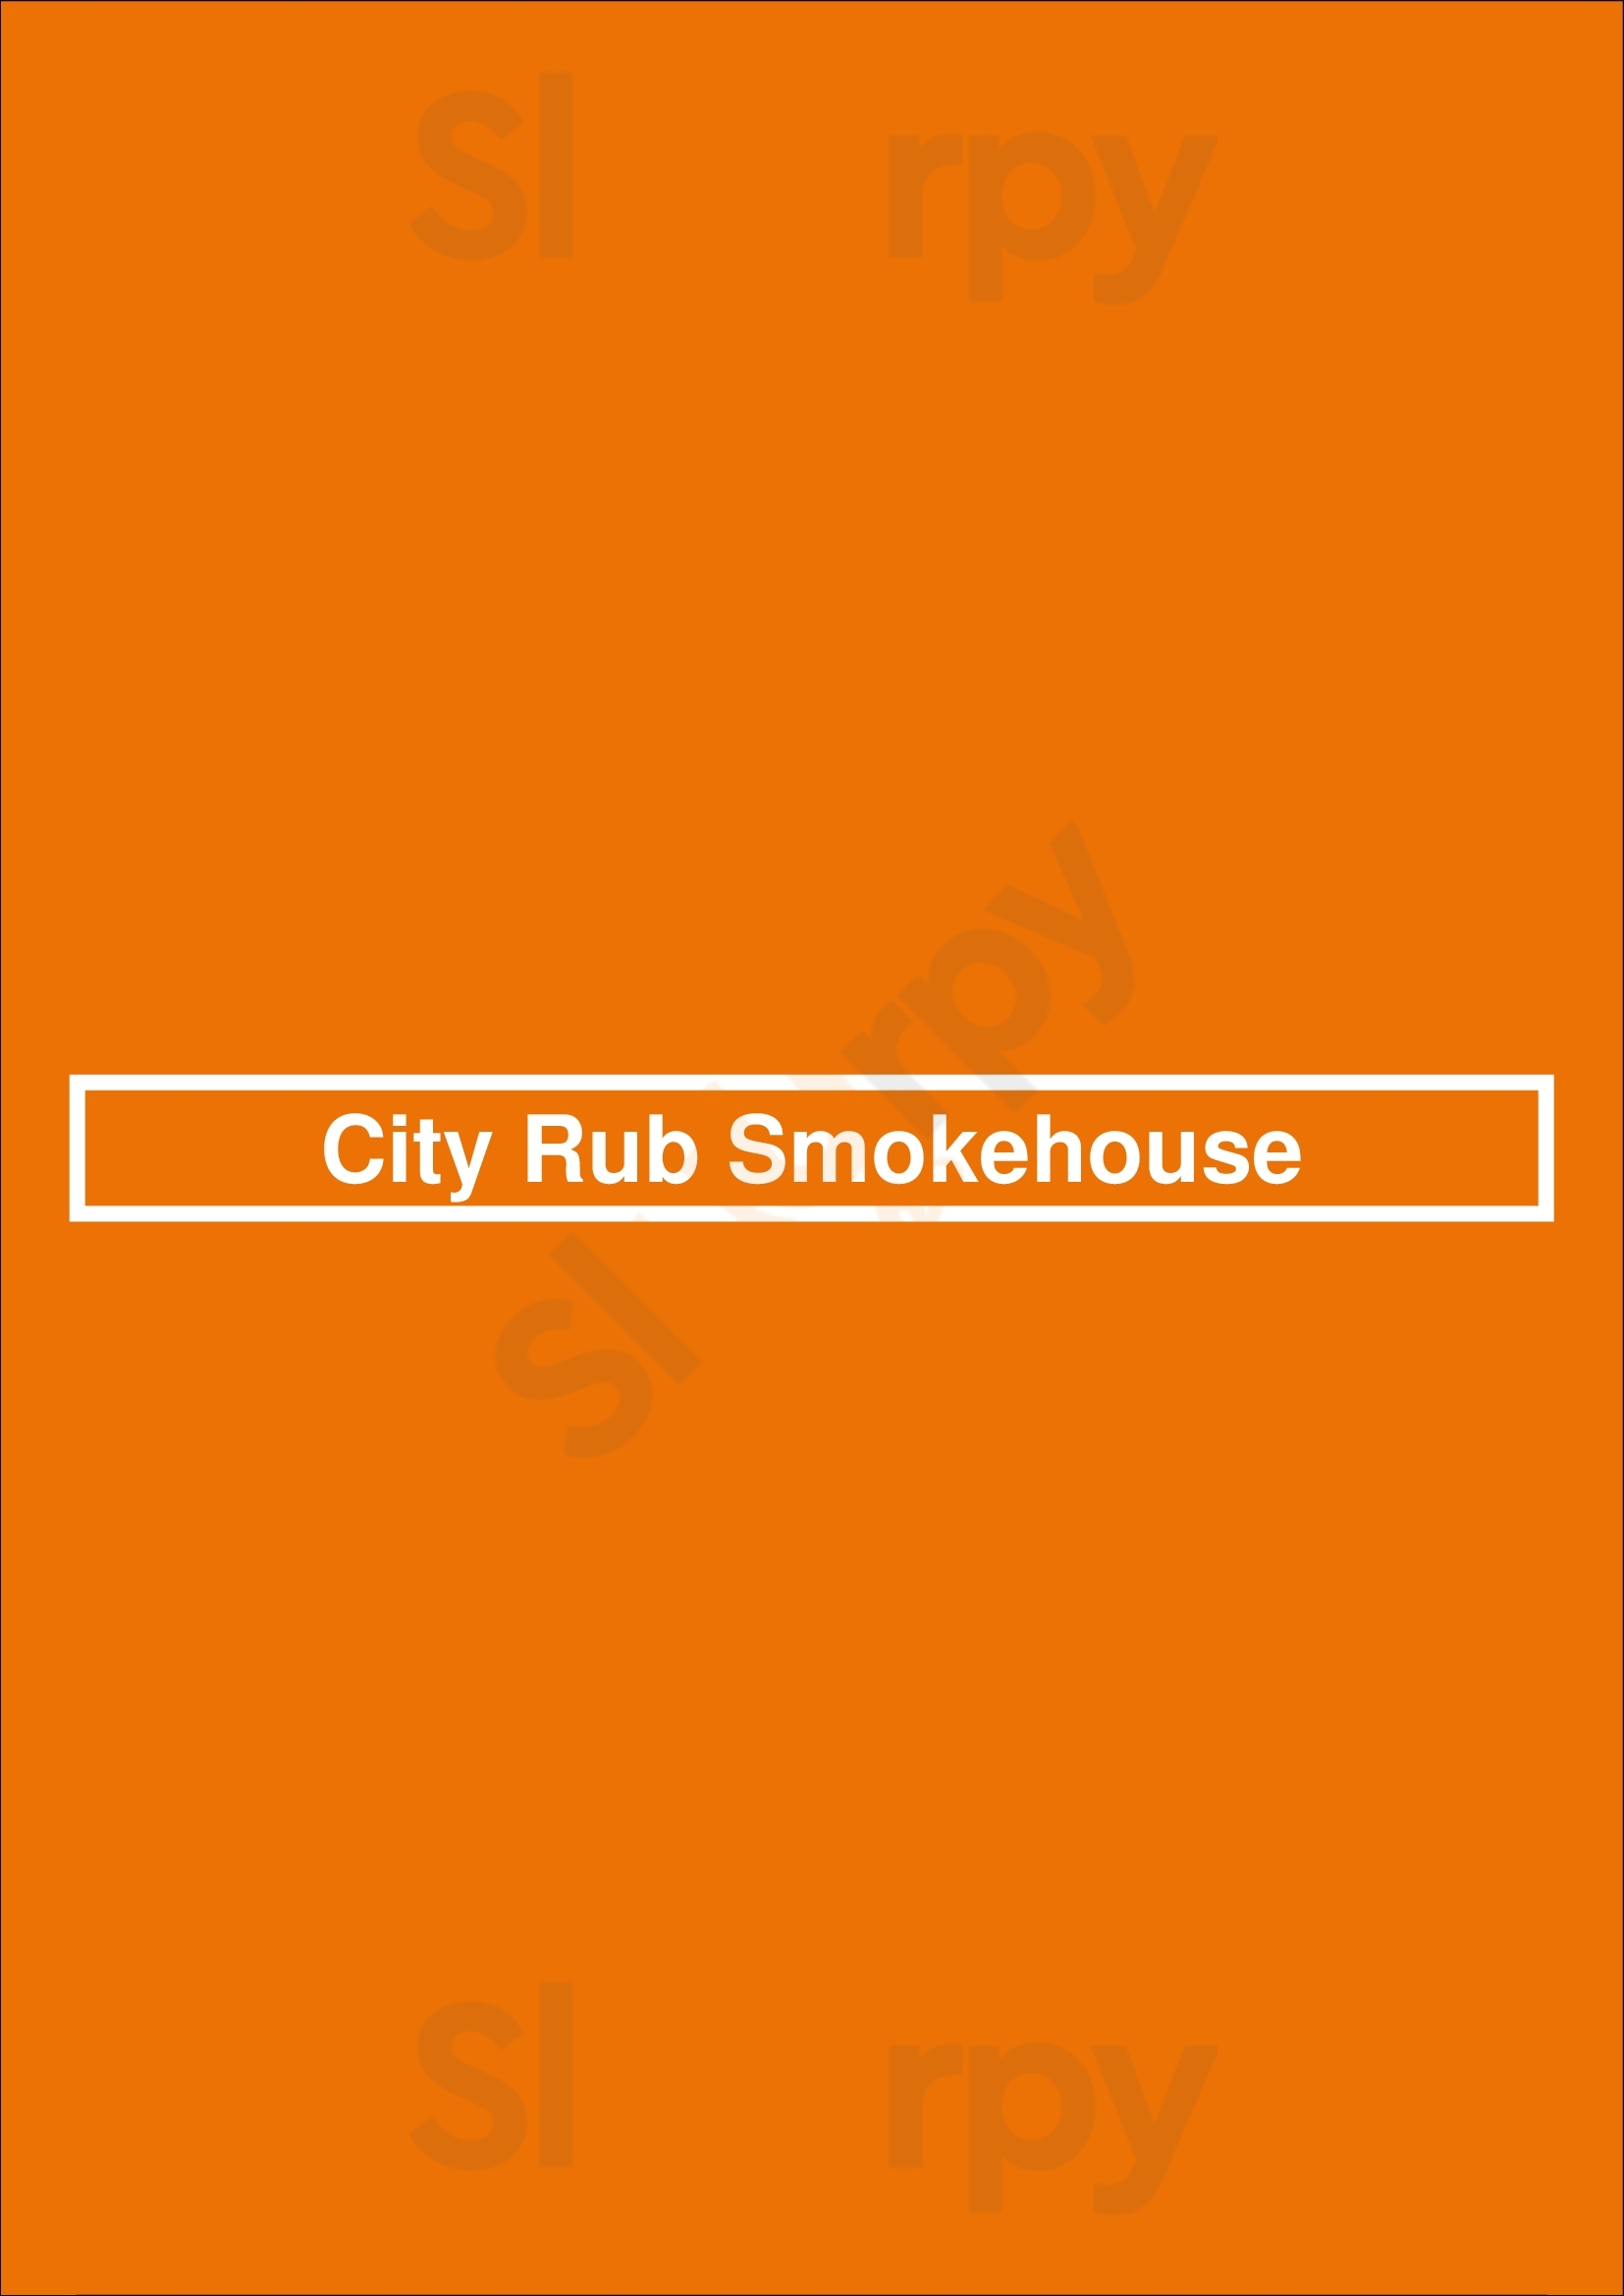 City Rub Smokehouse Newark Menu - 1